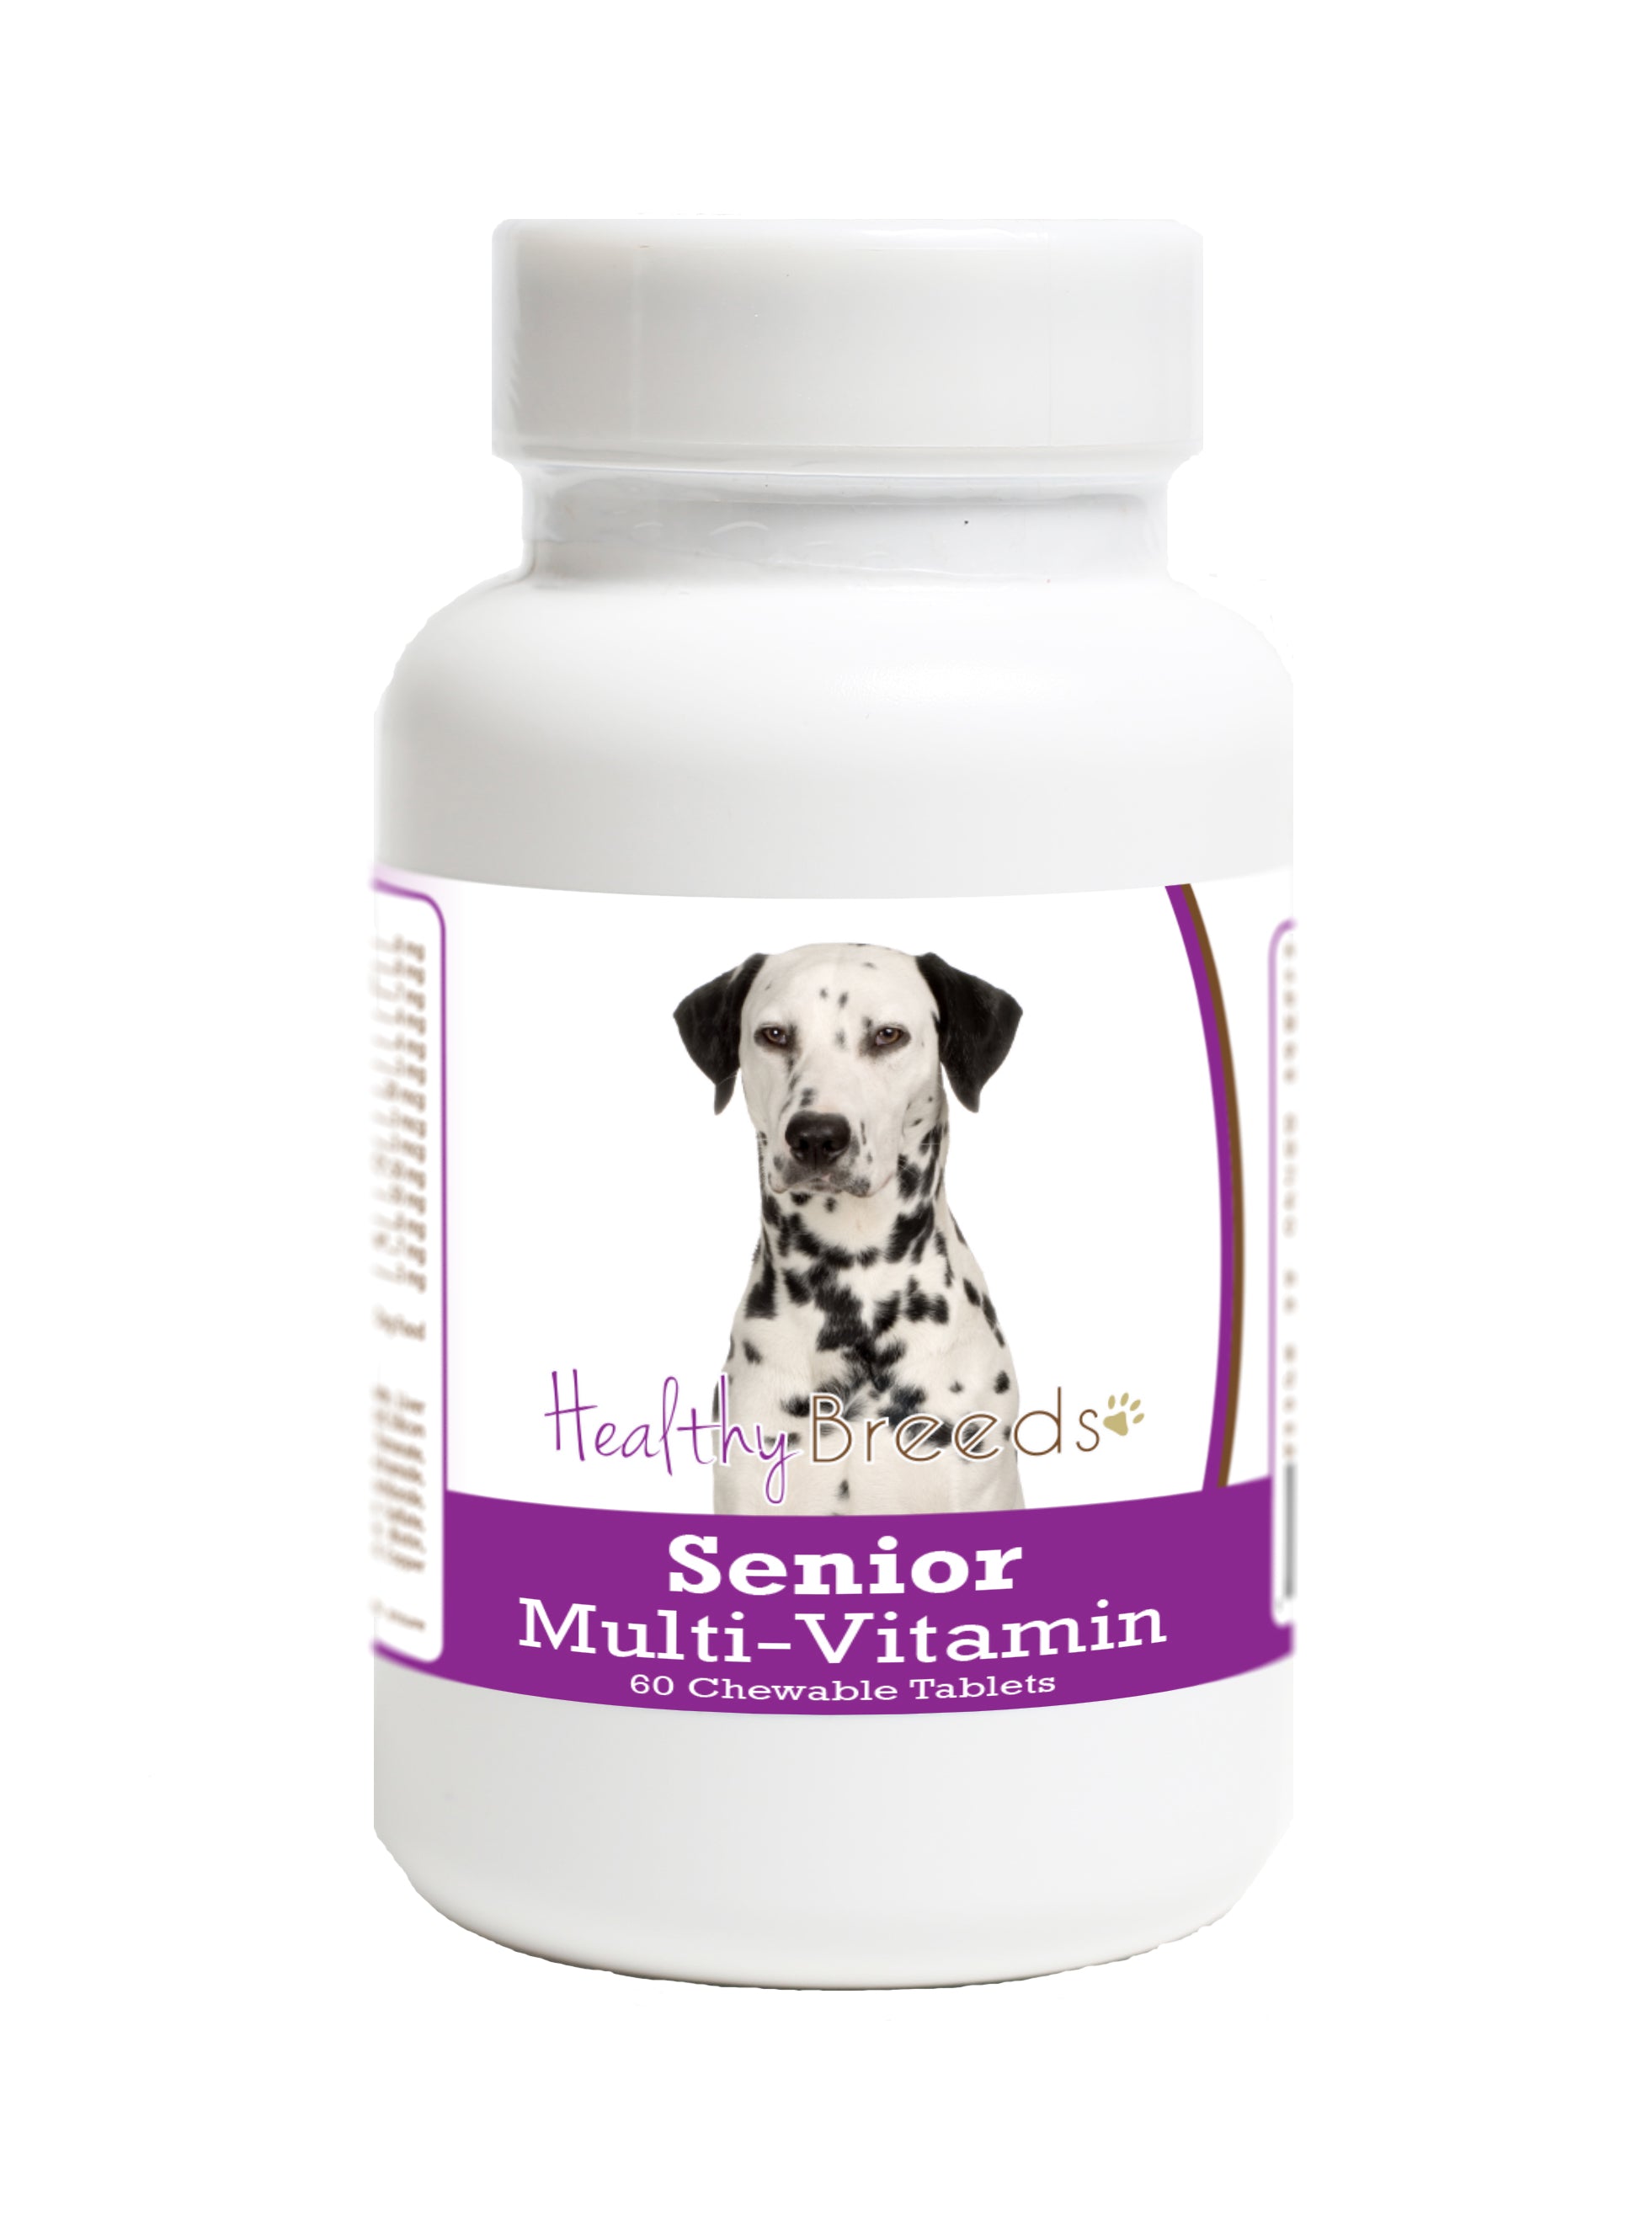 Dalmatian Senior Dog Multivitamin Tablets 60 Count